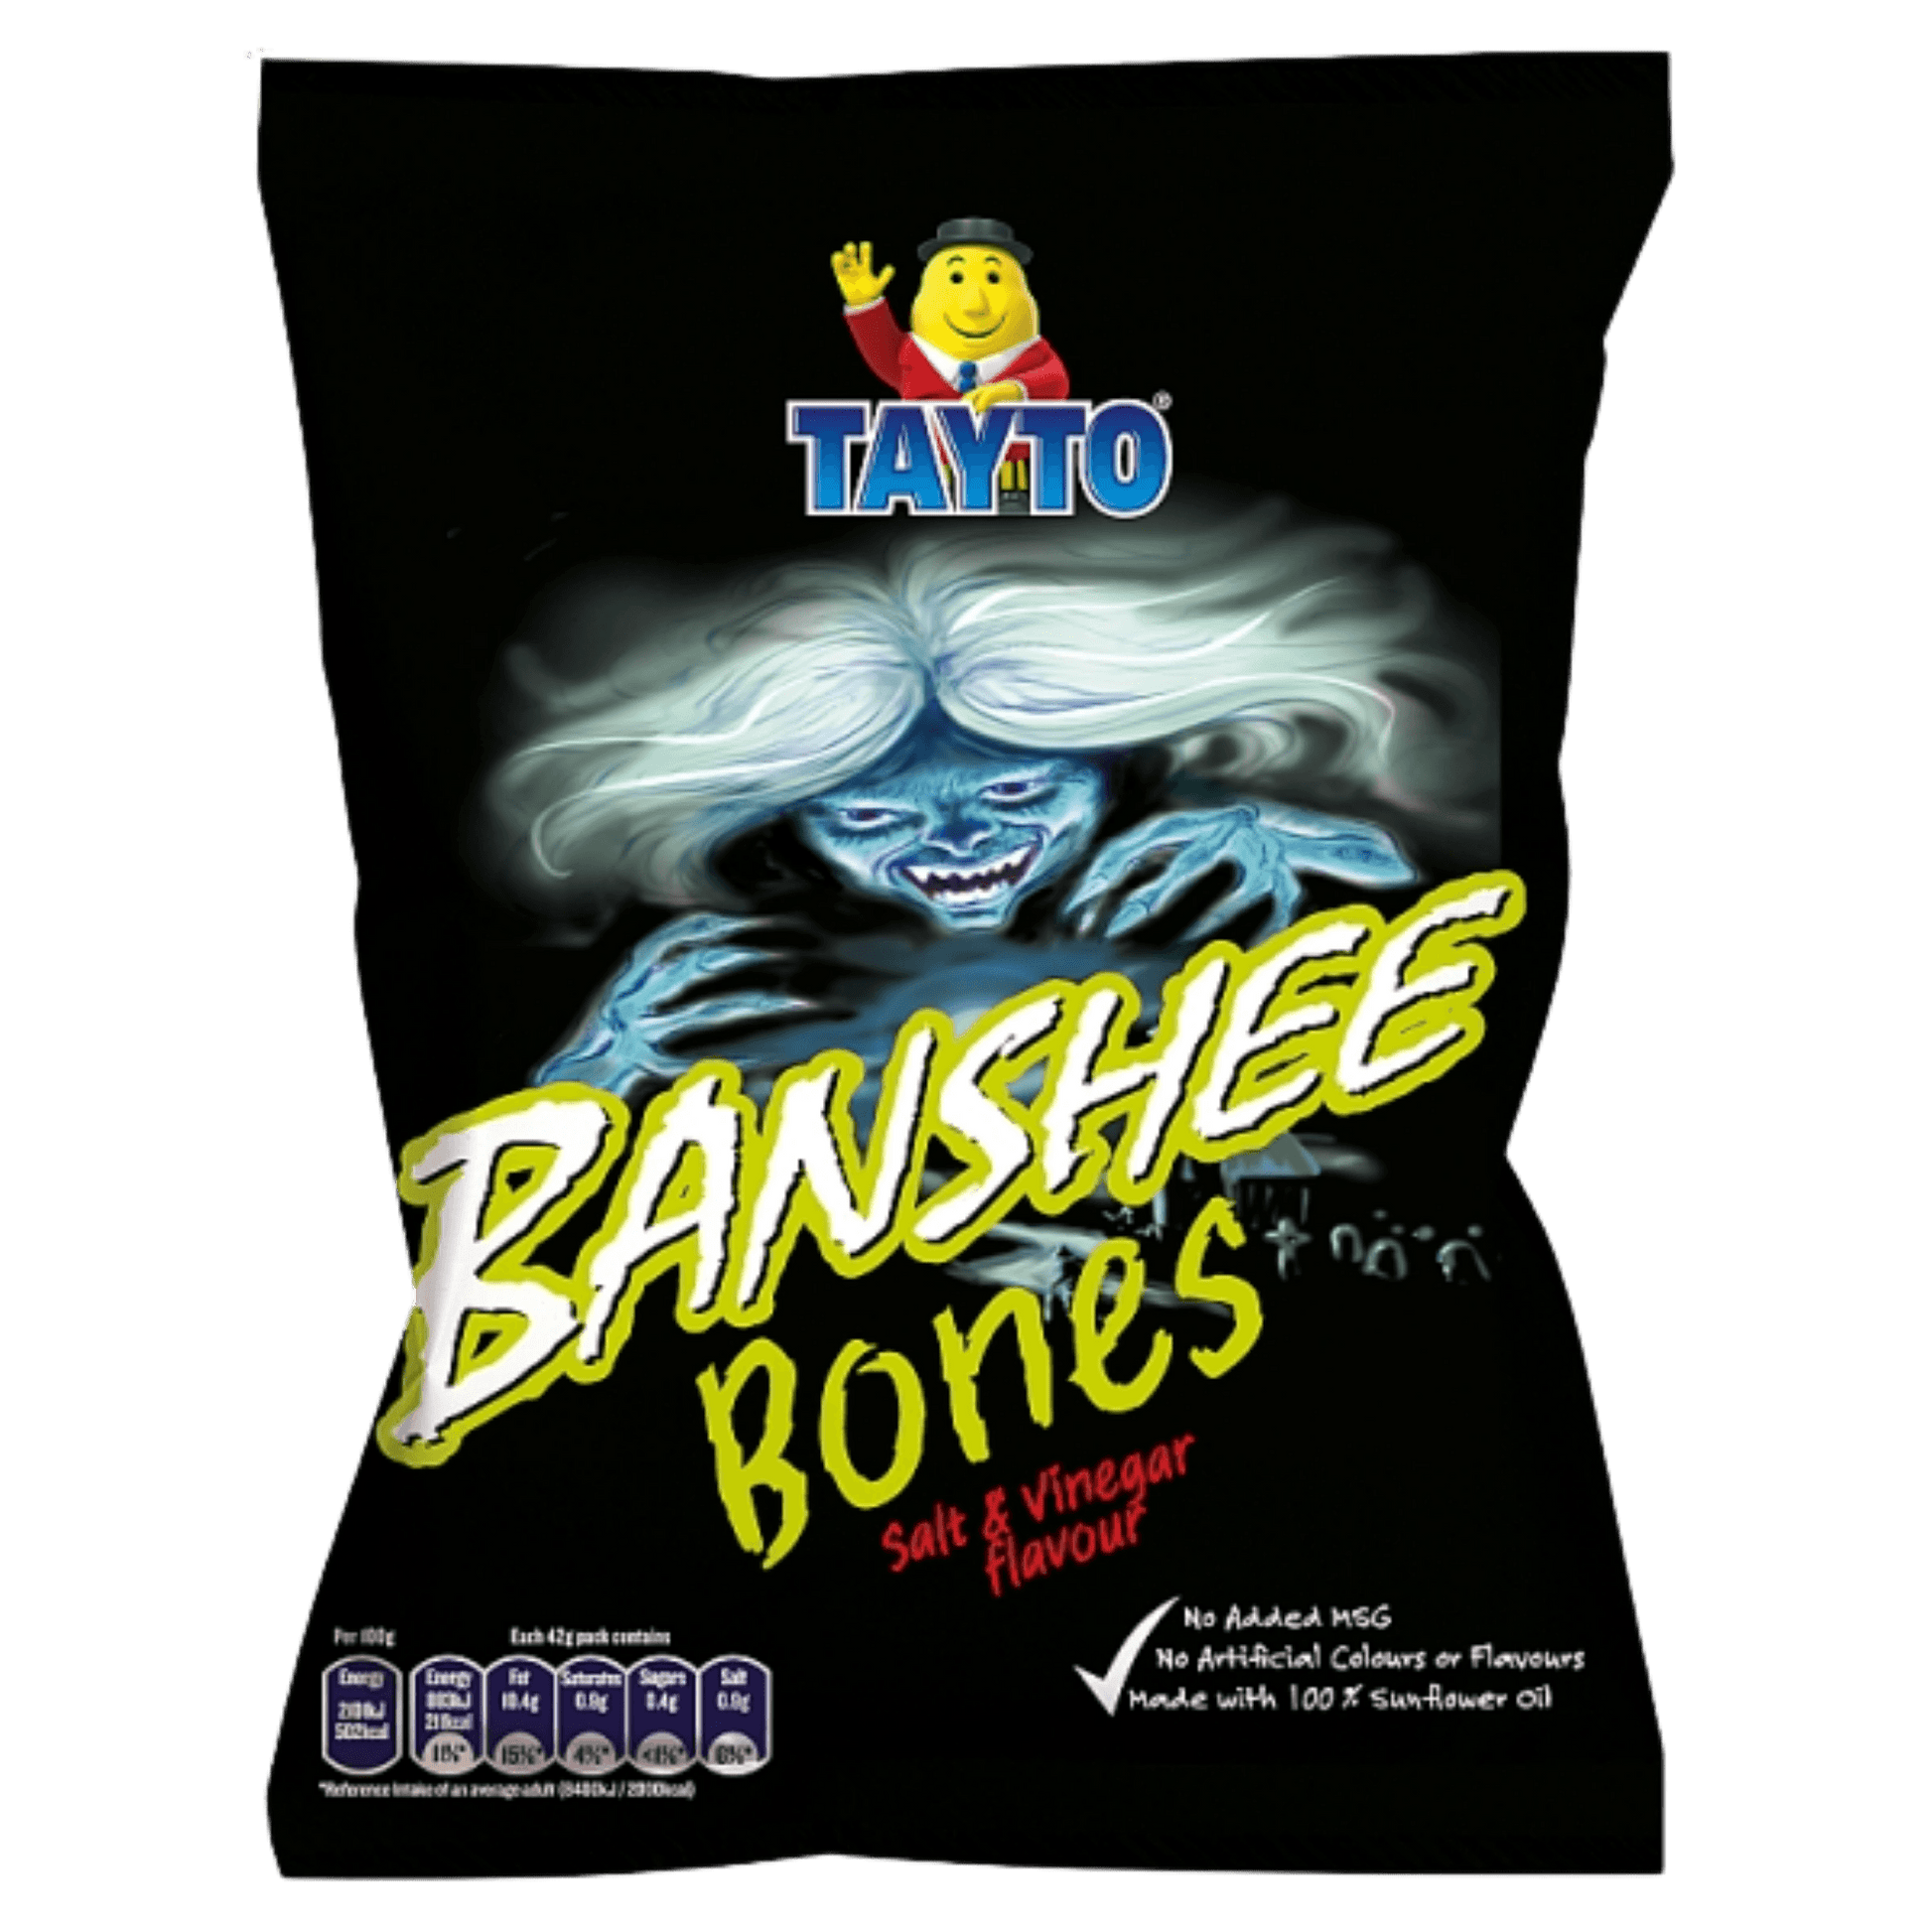 Tayto - Banshee Bones (42g) - Chips - Scran.ie